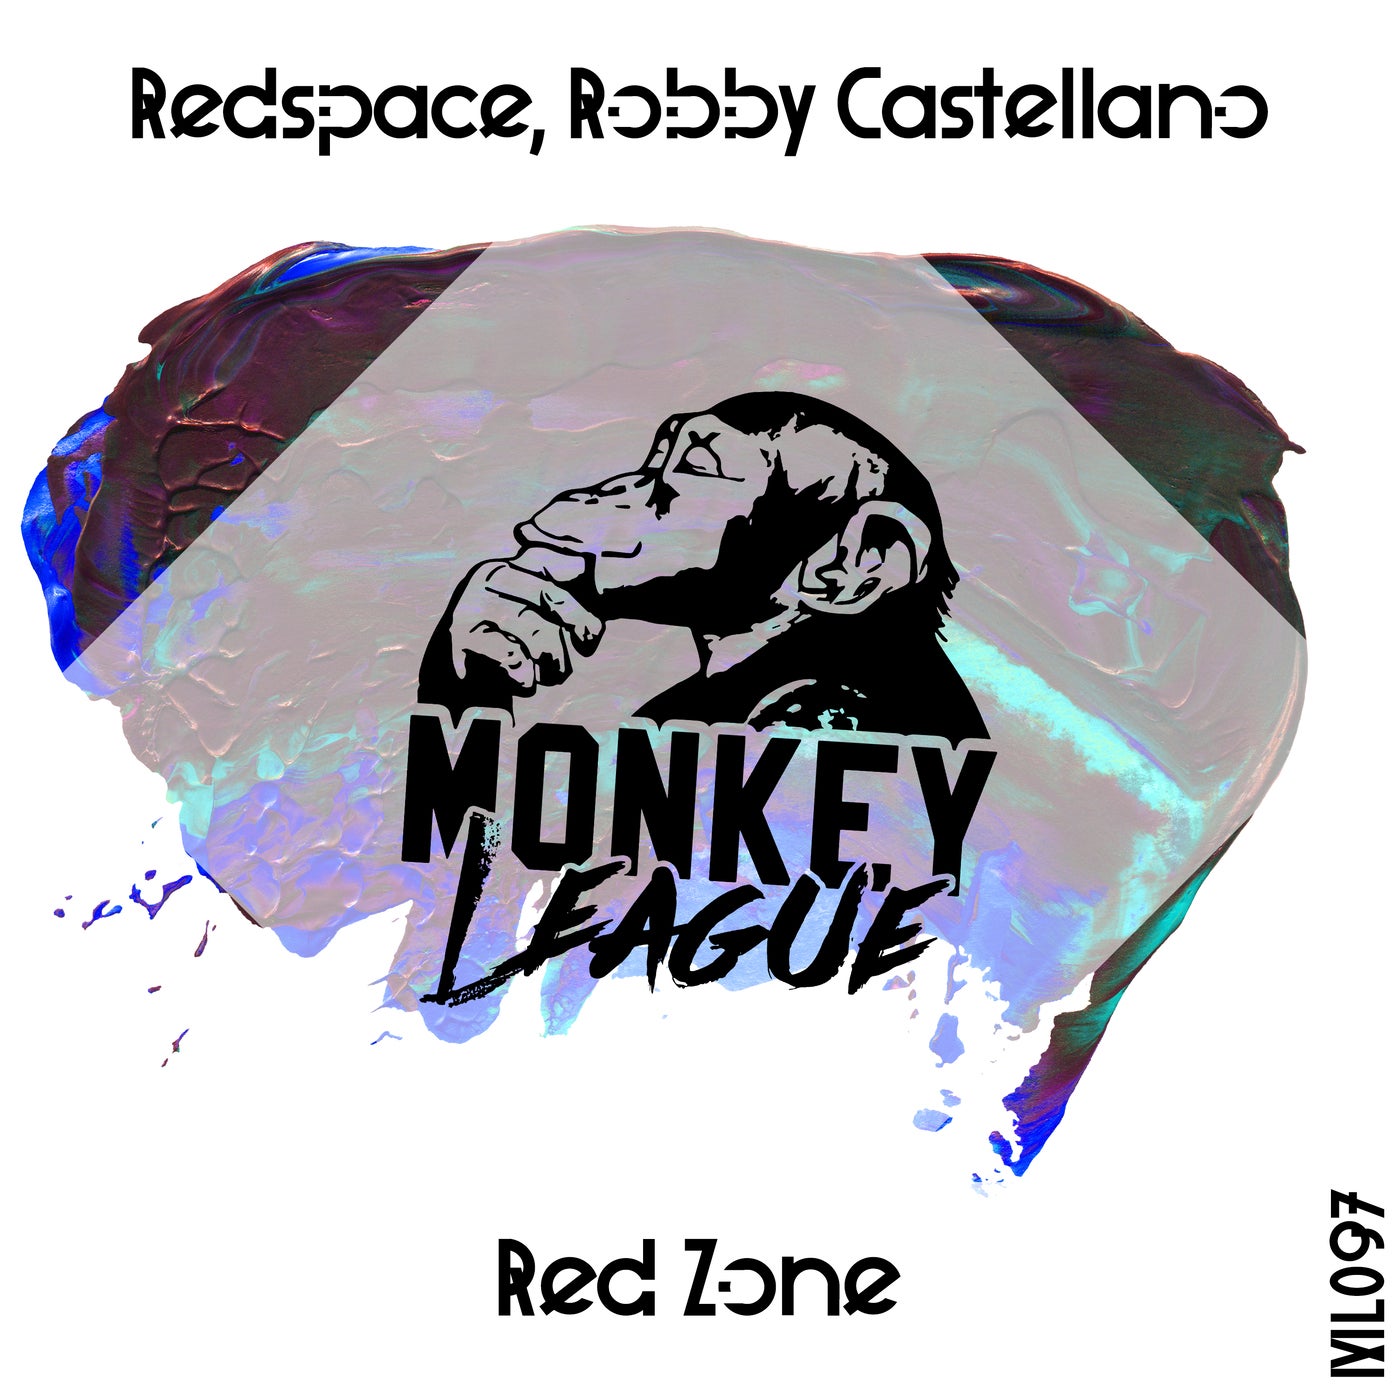 Redspace, Robby Castellano – Red Zone [ML097]